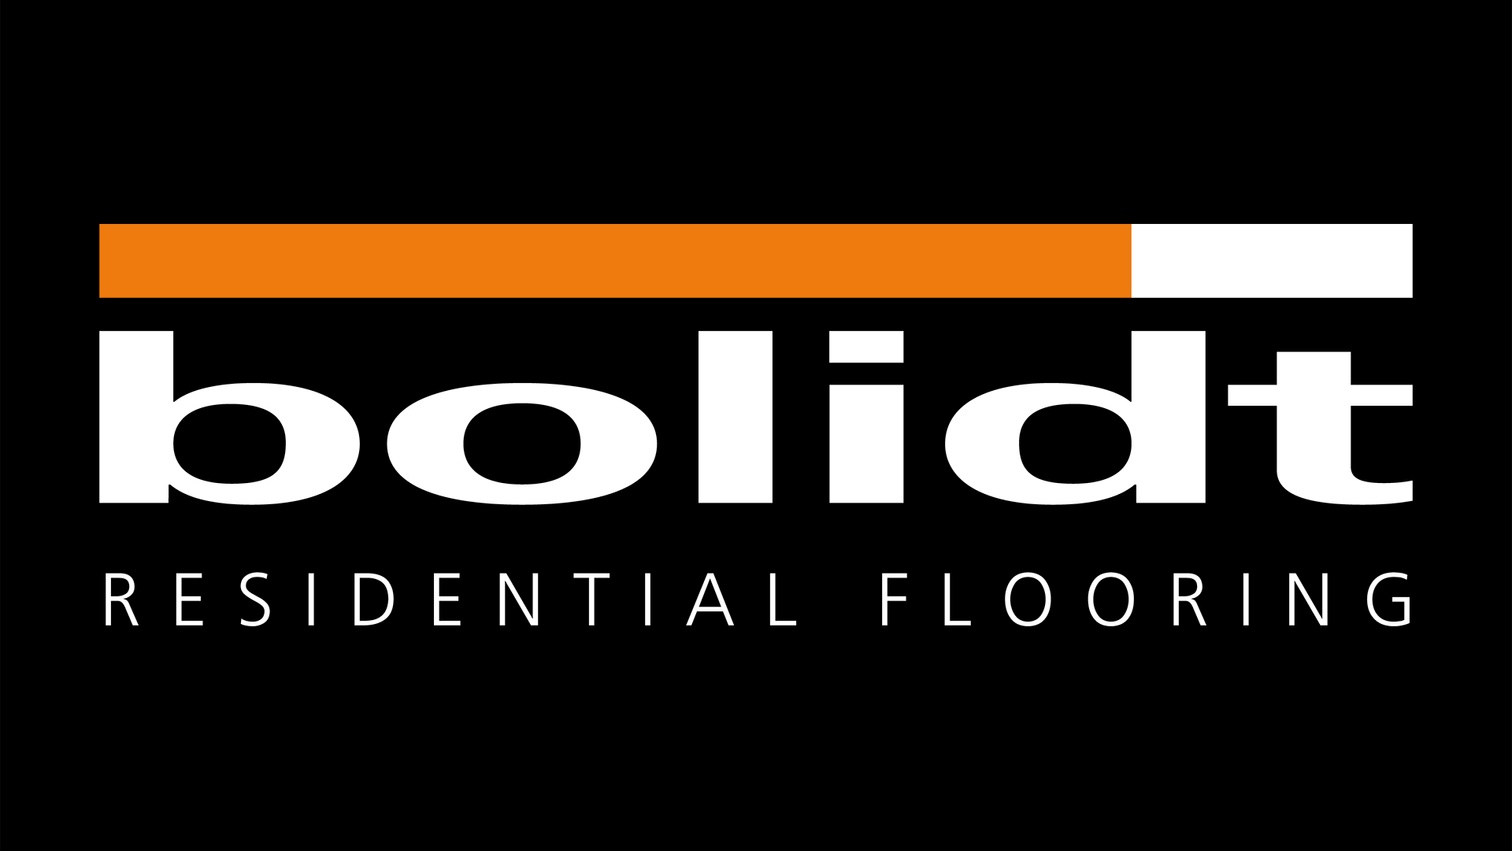 Residential Flooring by Bolidt logo